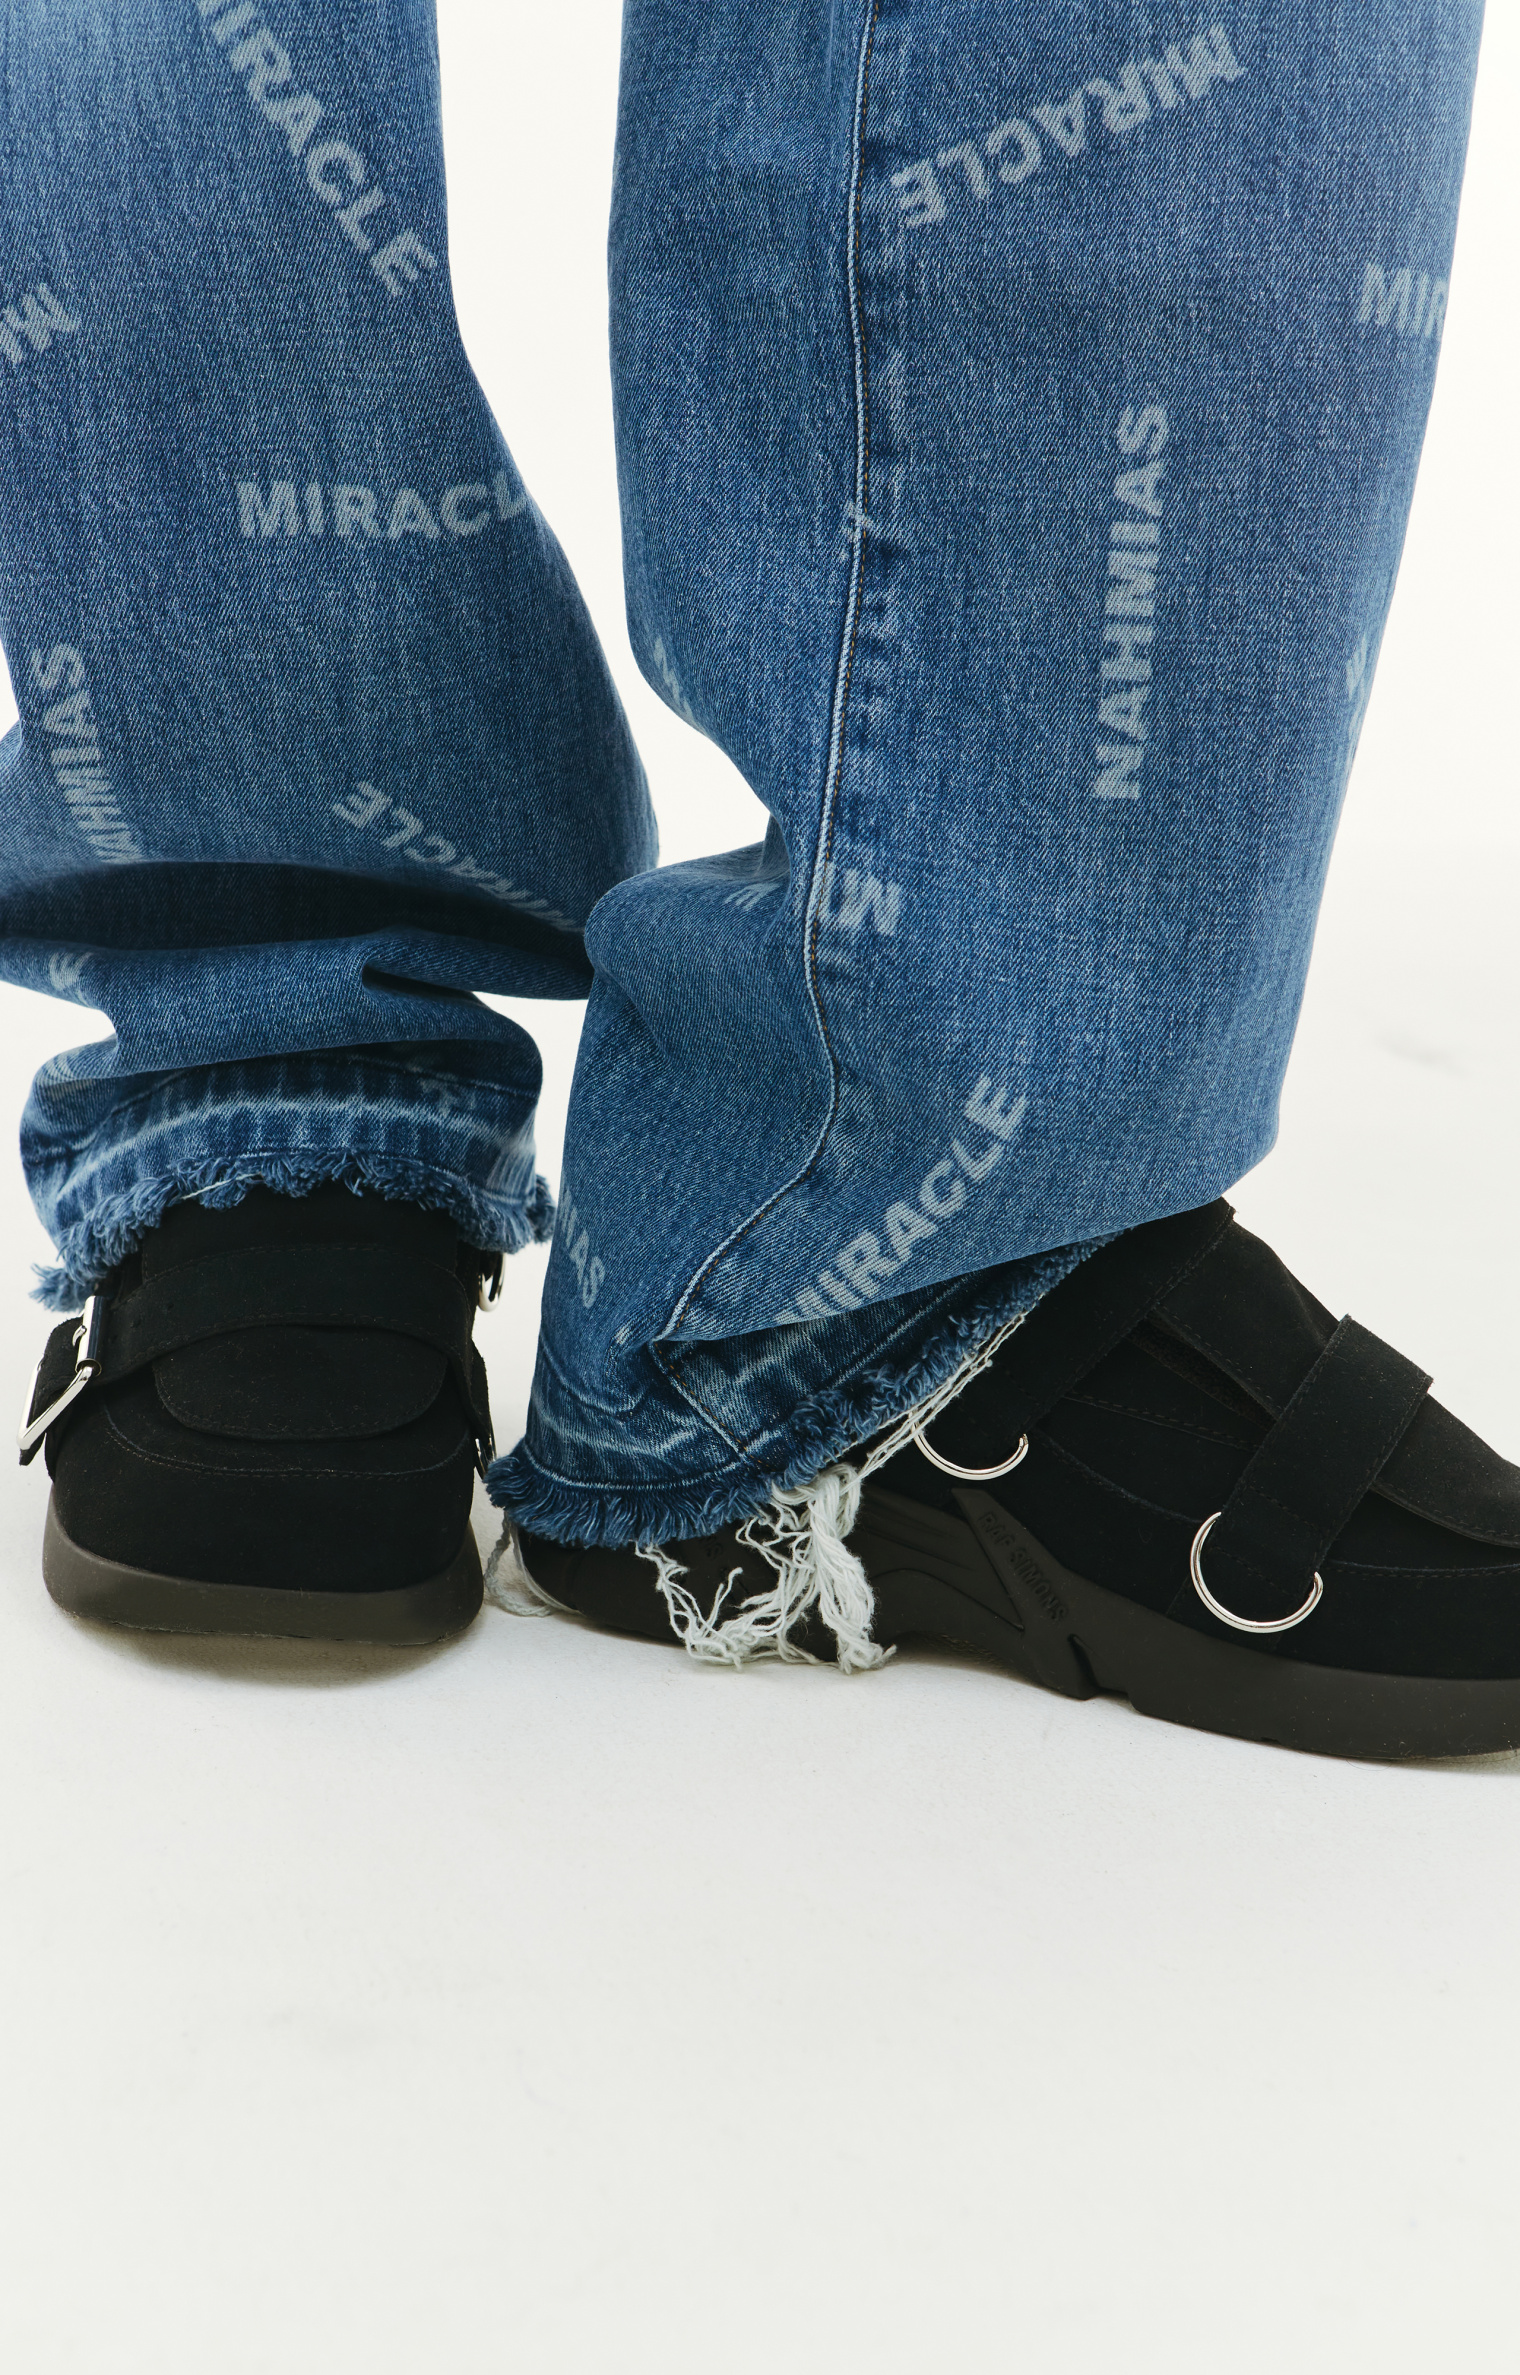 Nahmias Miracle logo jeans